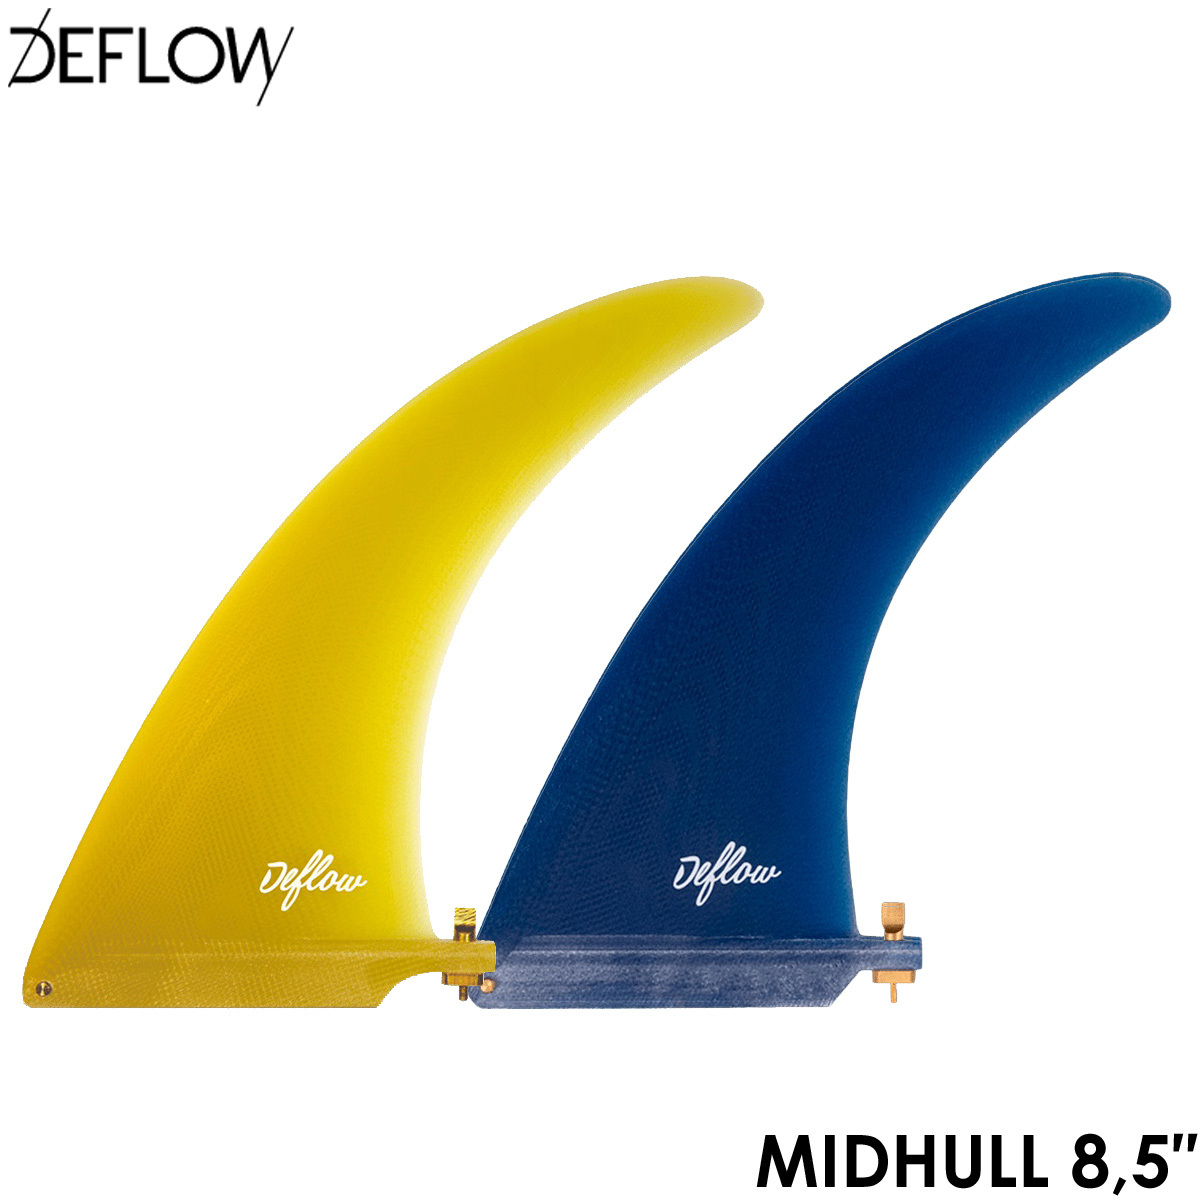 DEFLOWフィン - サーフィン